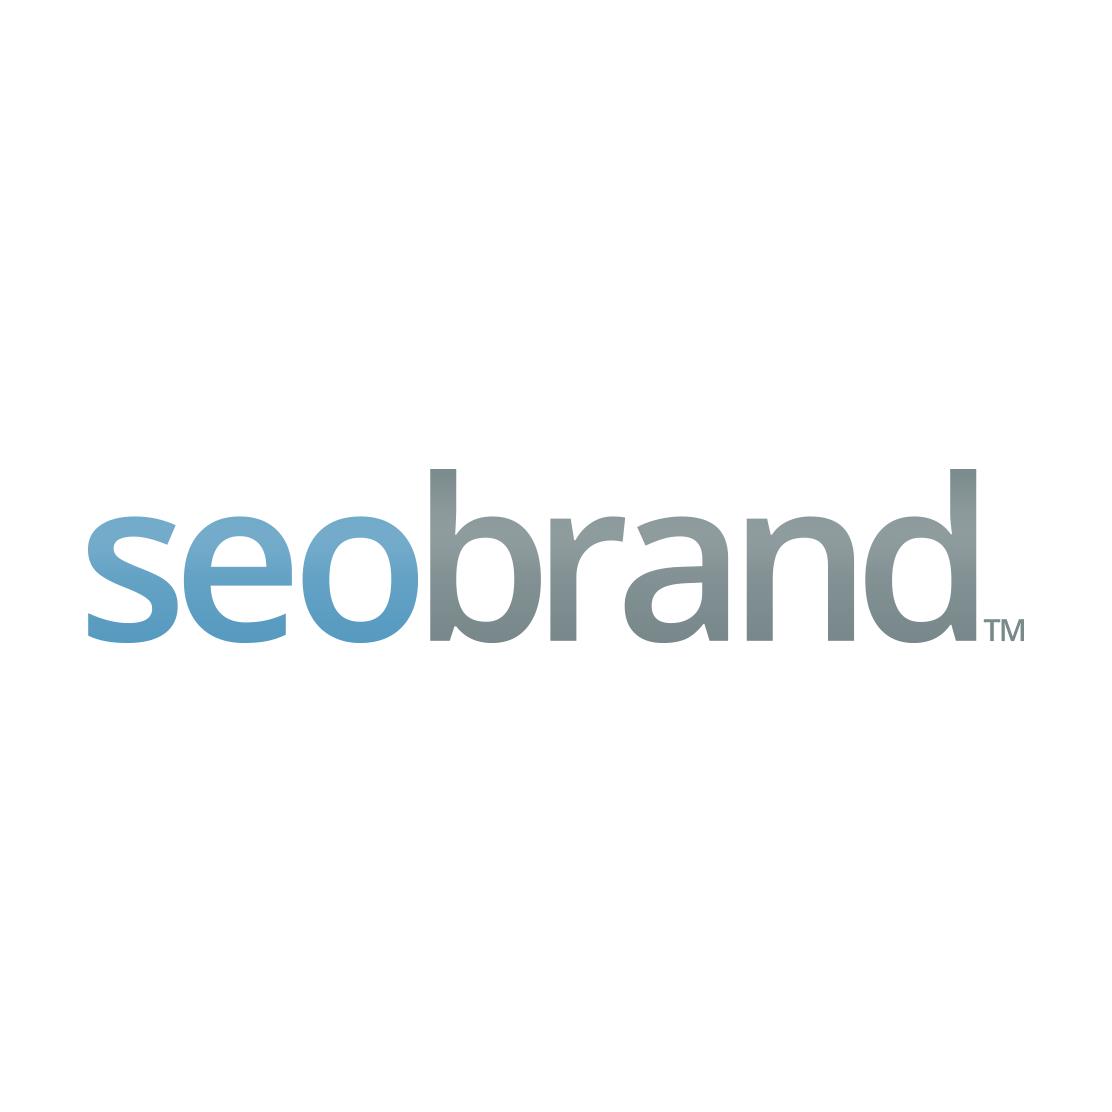 Top Philadelphia SEO Firm Logo: SEO Brand